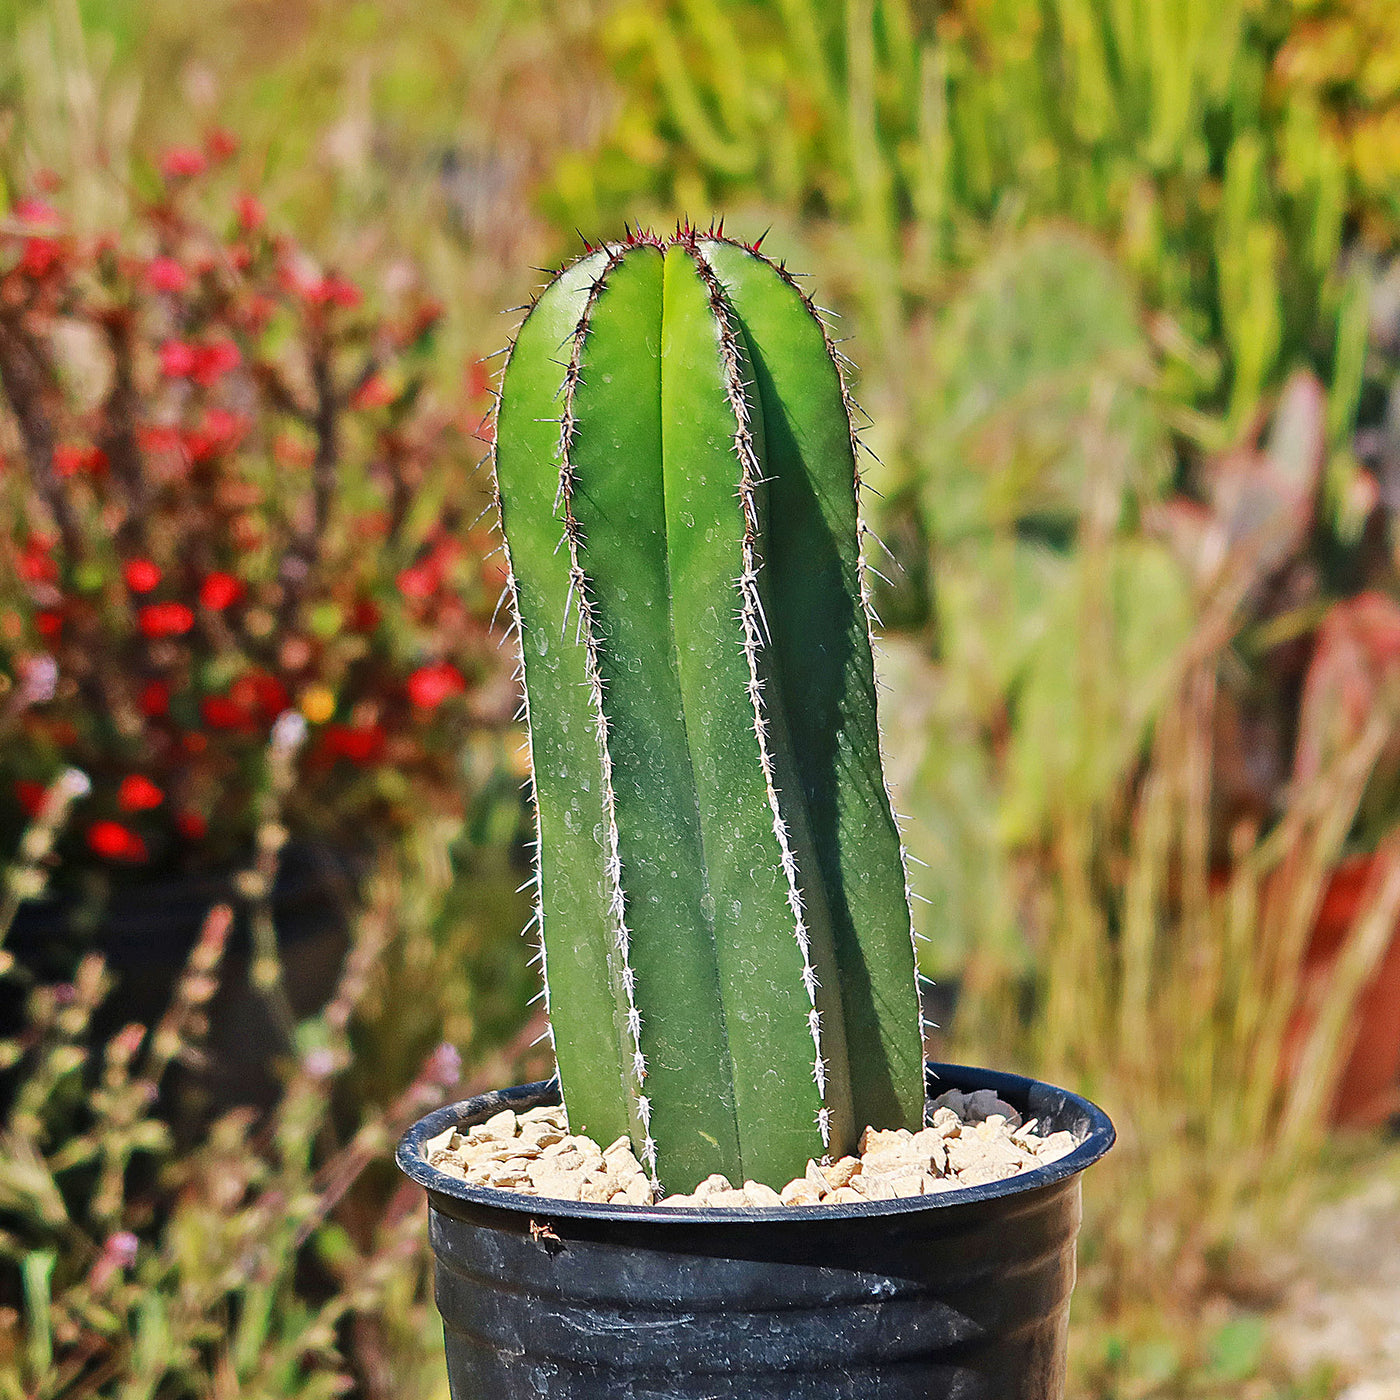 Mexican Fence Post Cactus 'Pachycereus marginatus' (16)